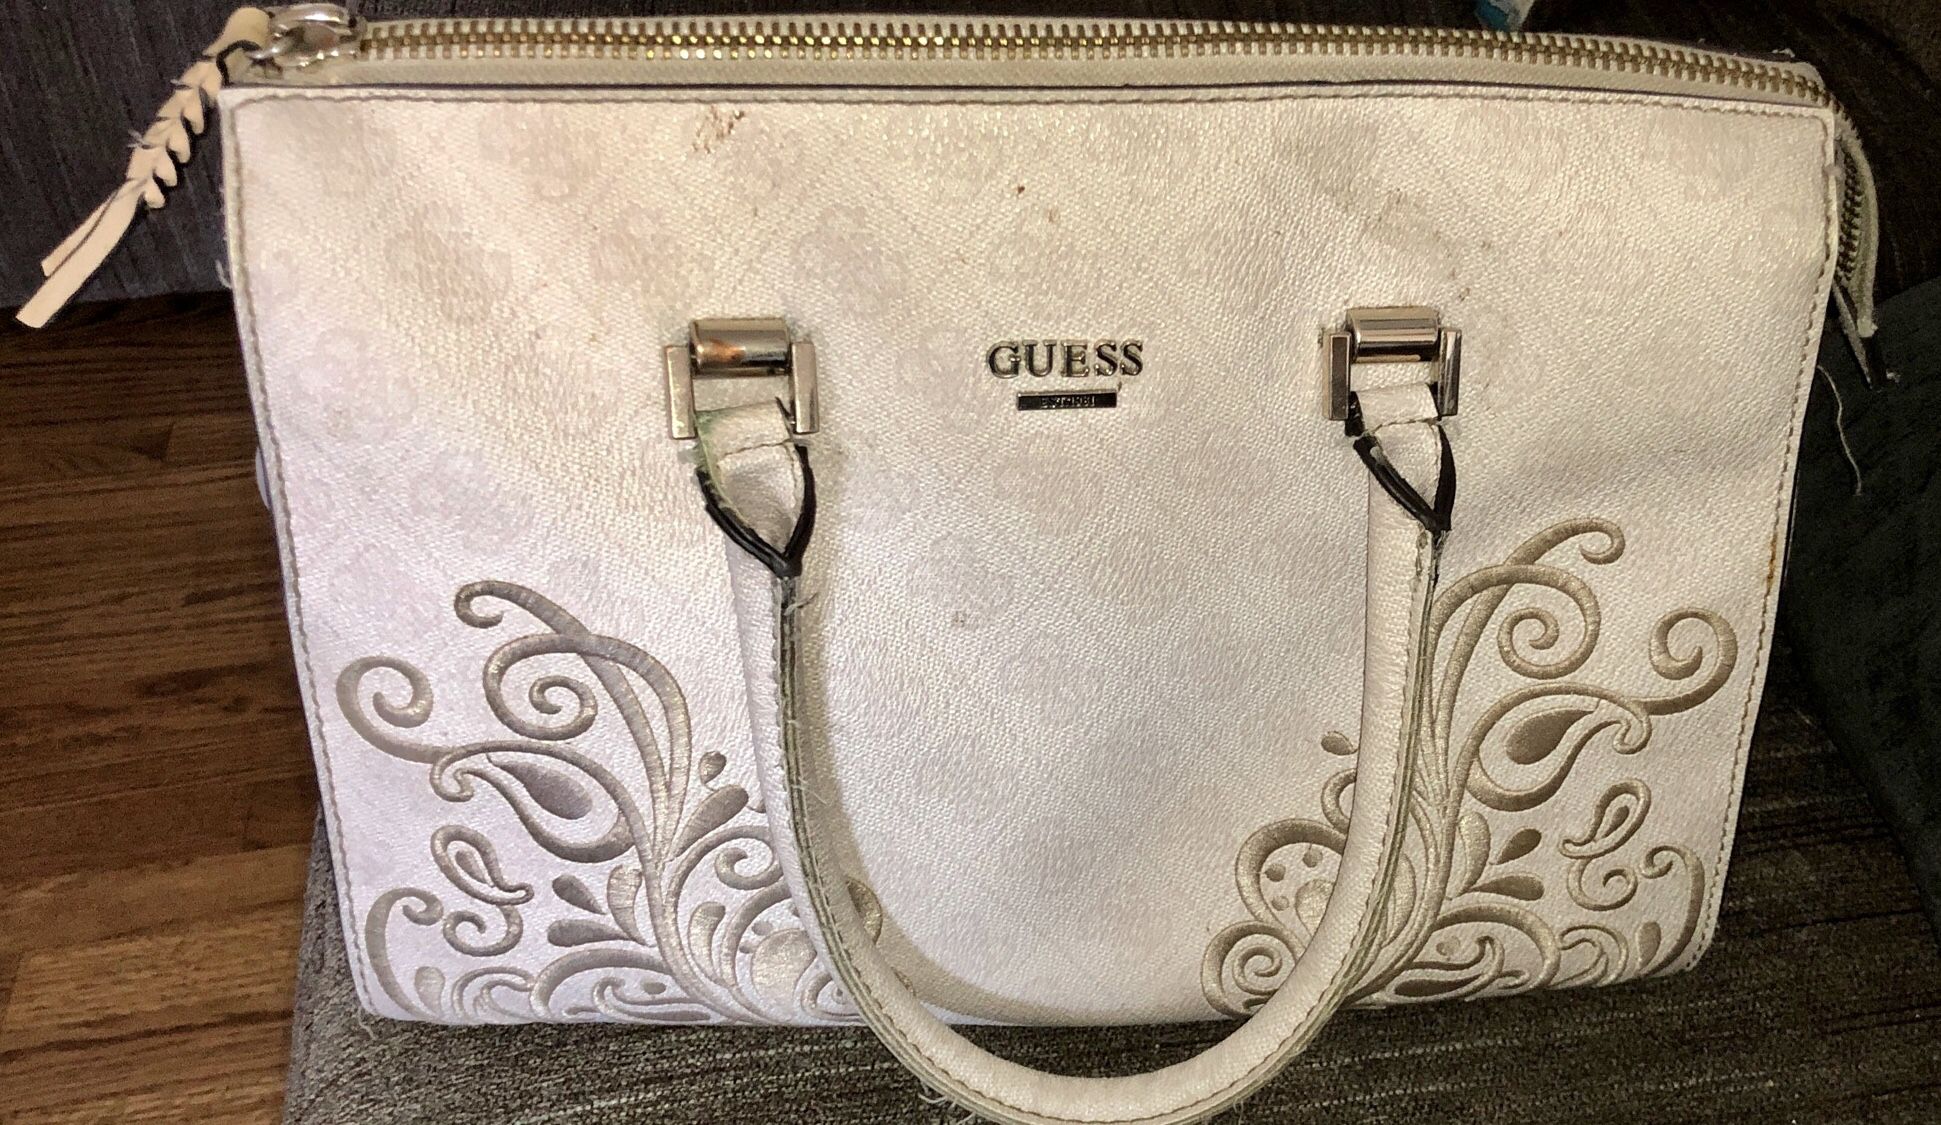 Guess Blush Purse / Handbag 